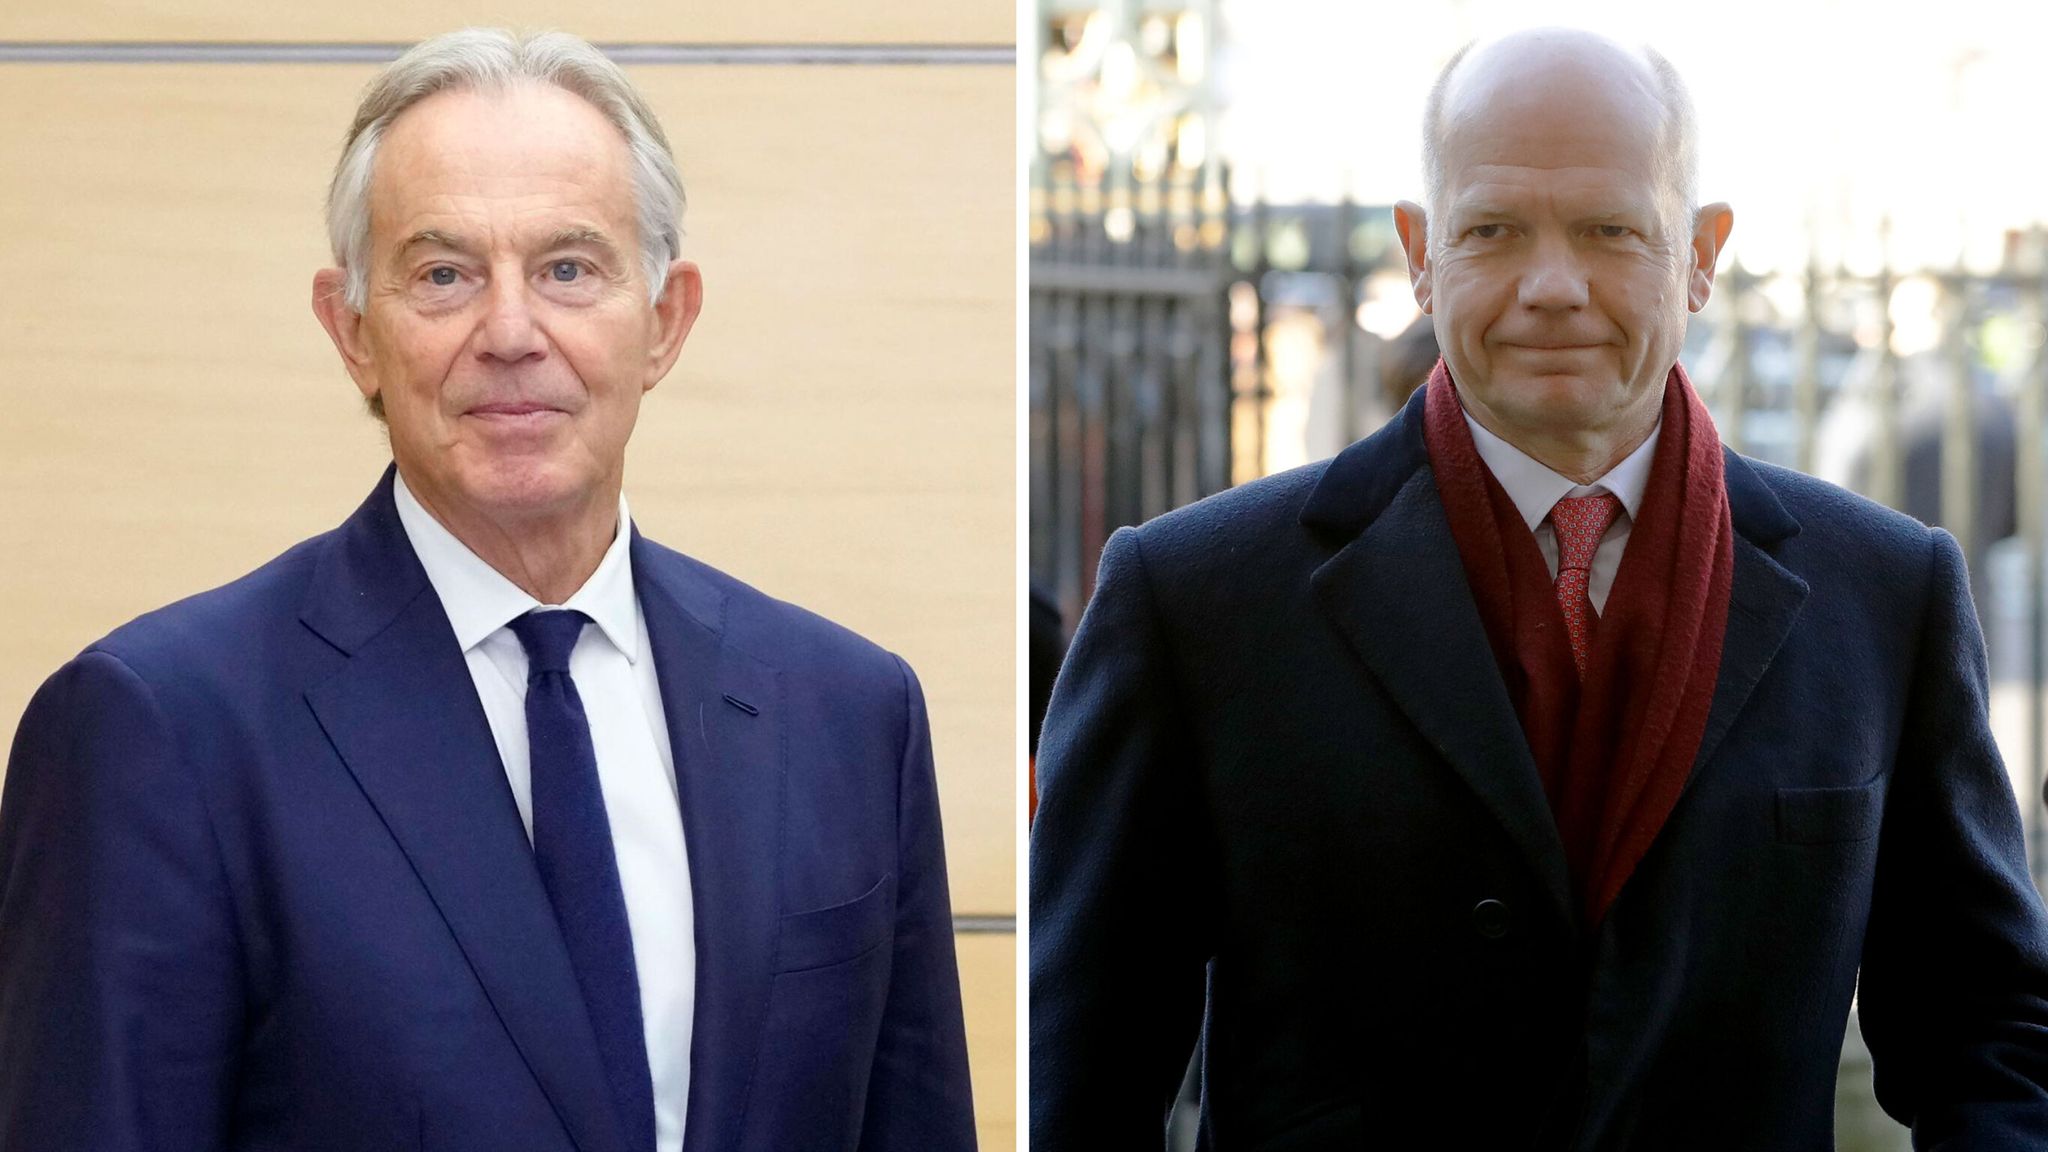 Tony Blair And William Hague Call For Everyone To Have Digital Id Cards Politics News Sky News